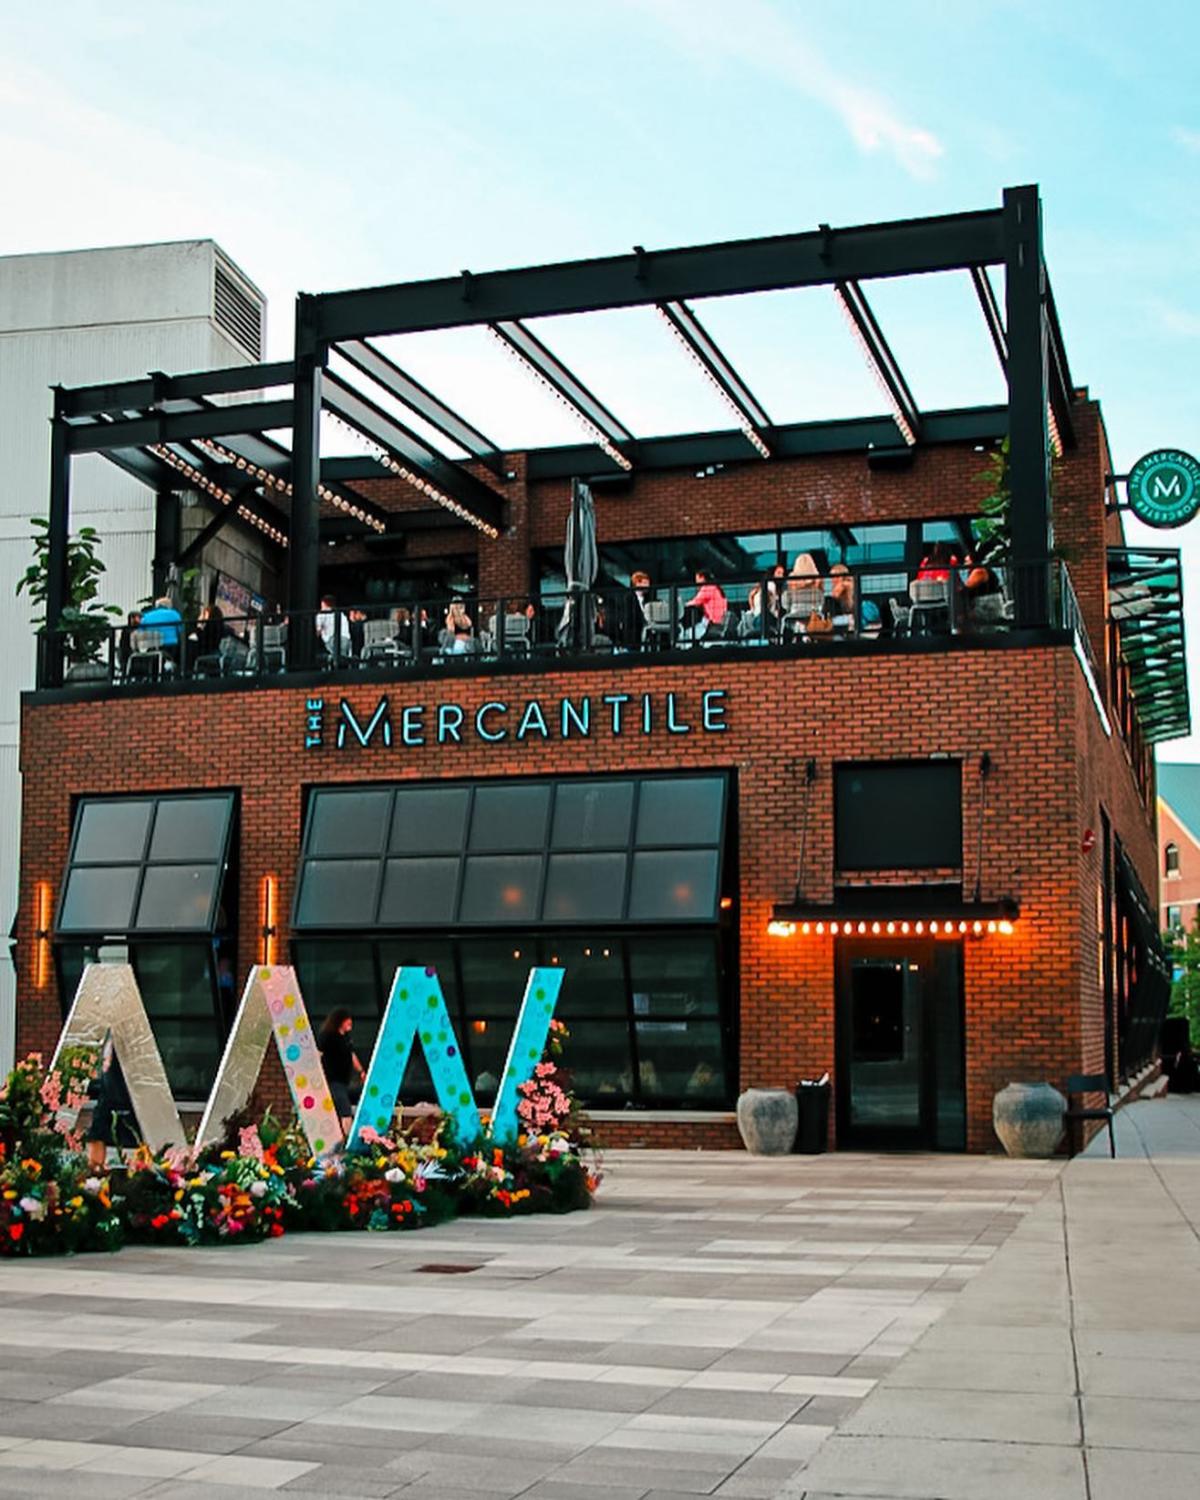 The Mercantile Rooftop Bar & Restaurant